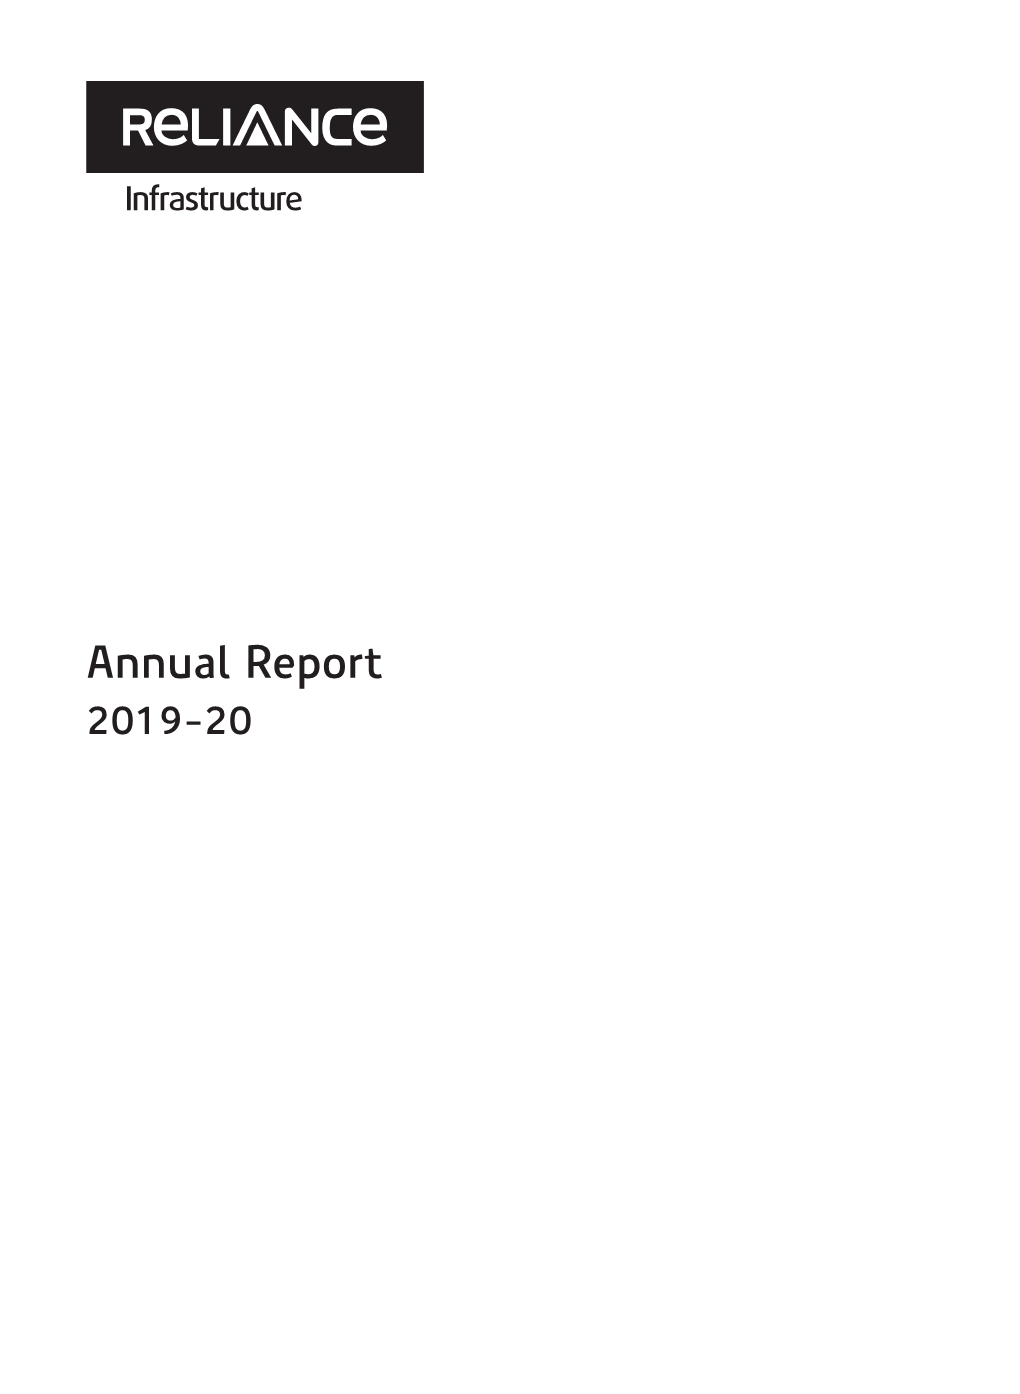 Annual Report 2019-20 Padma Vibhushan Shri Dhirubhai H